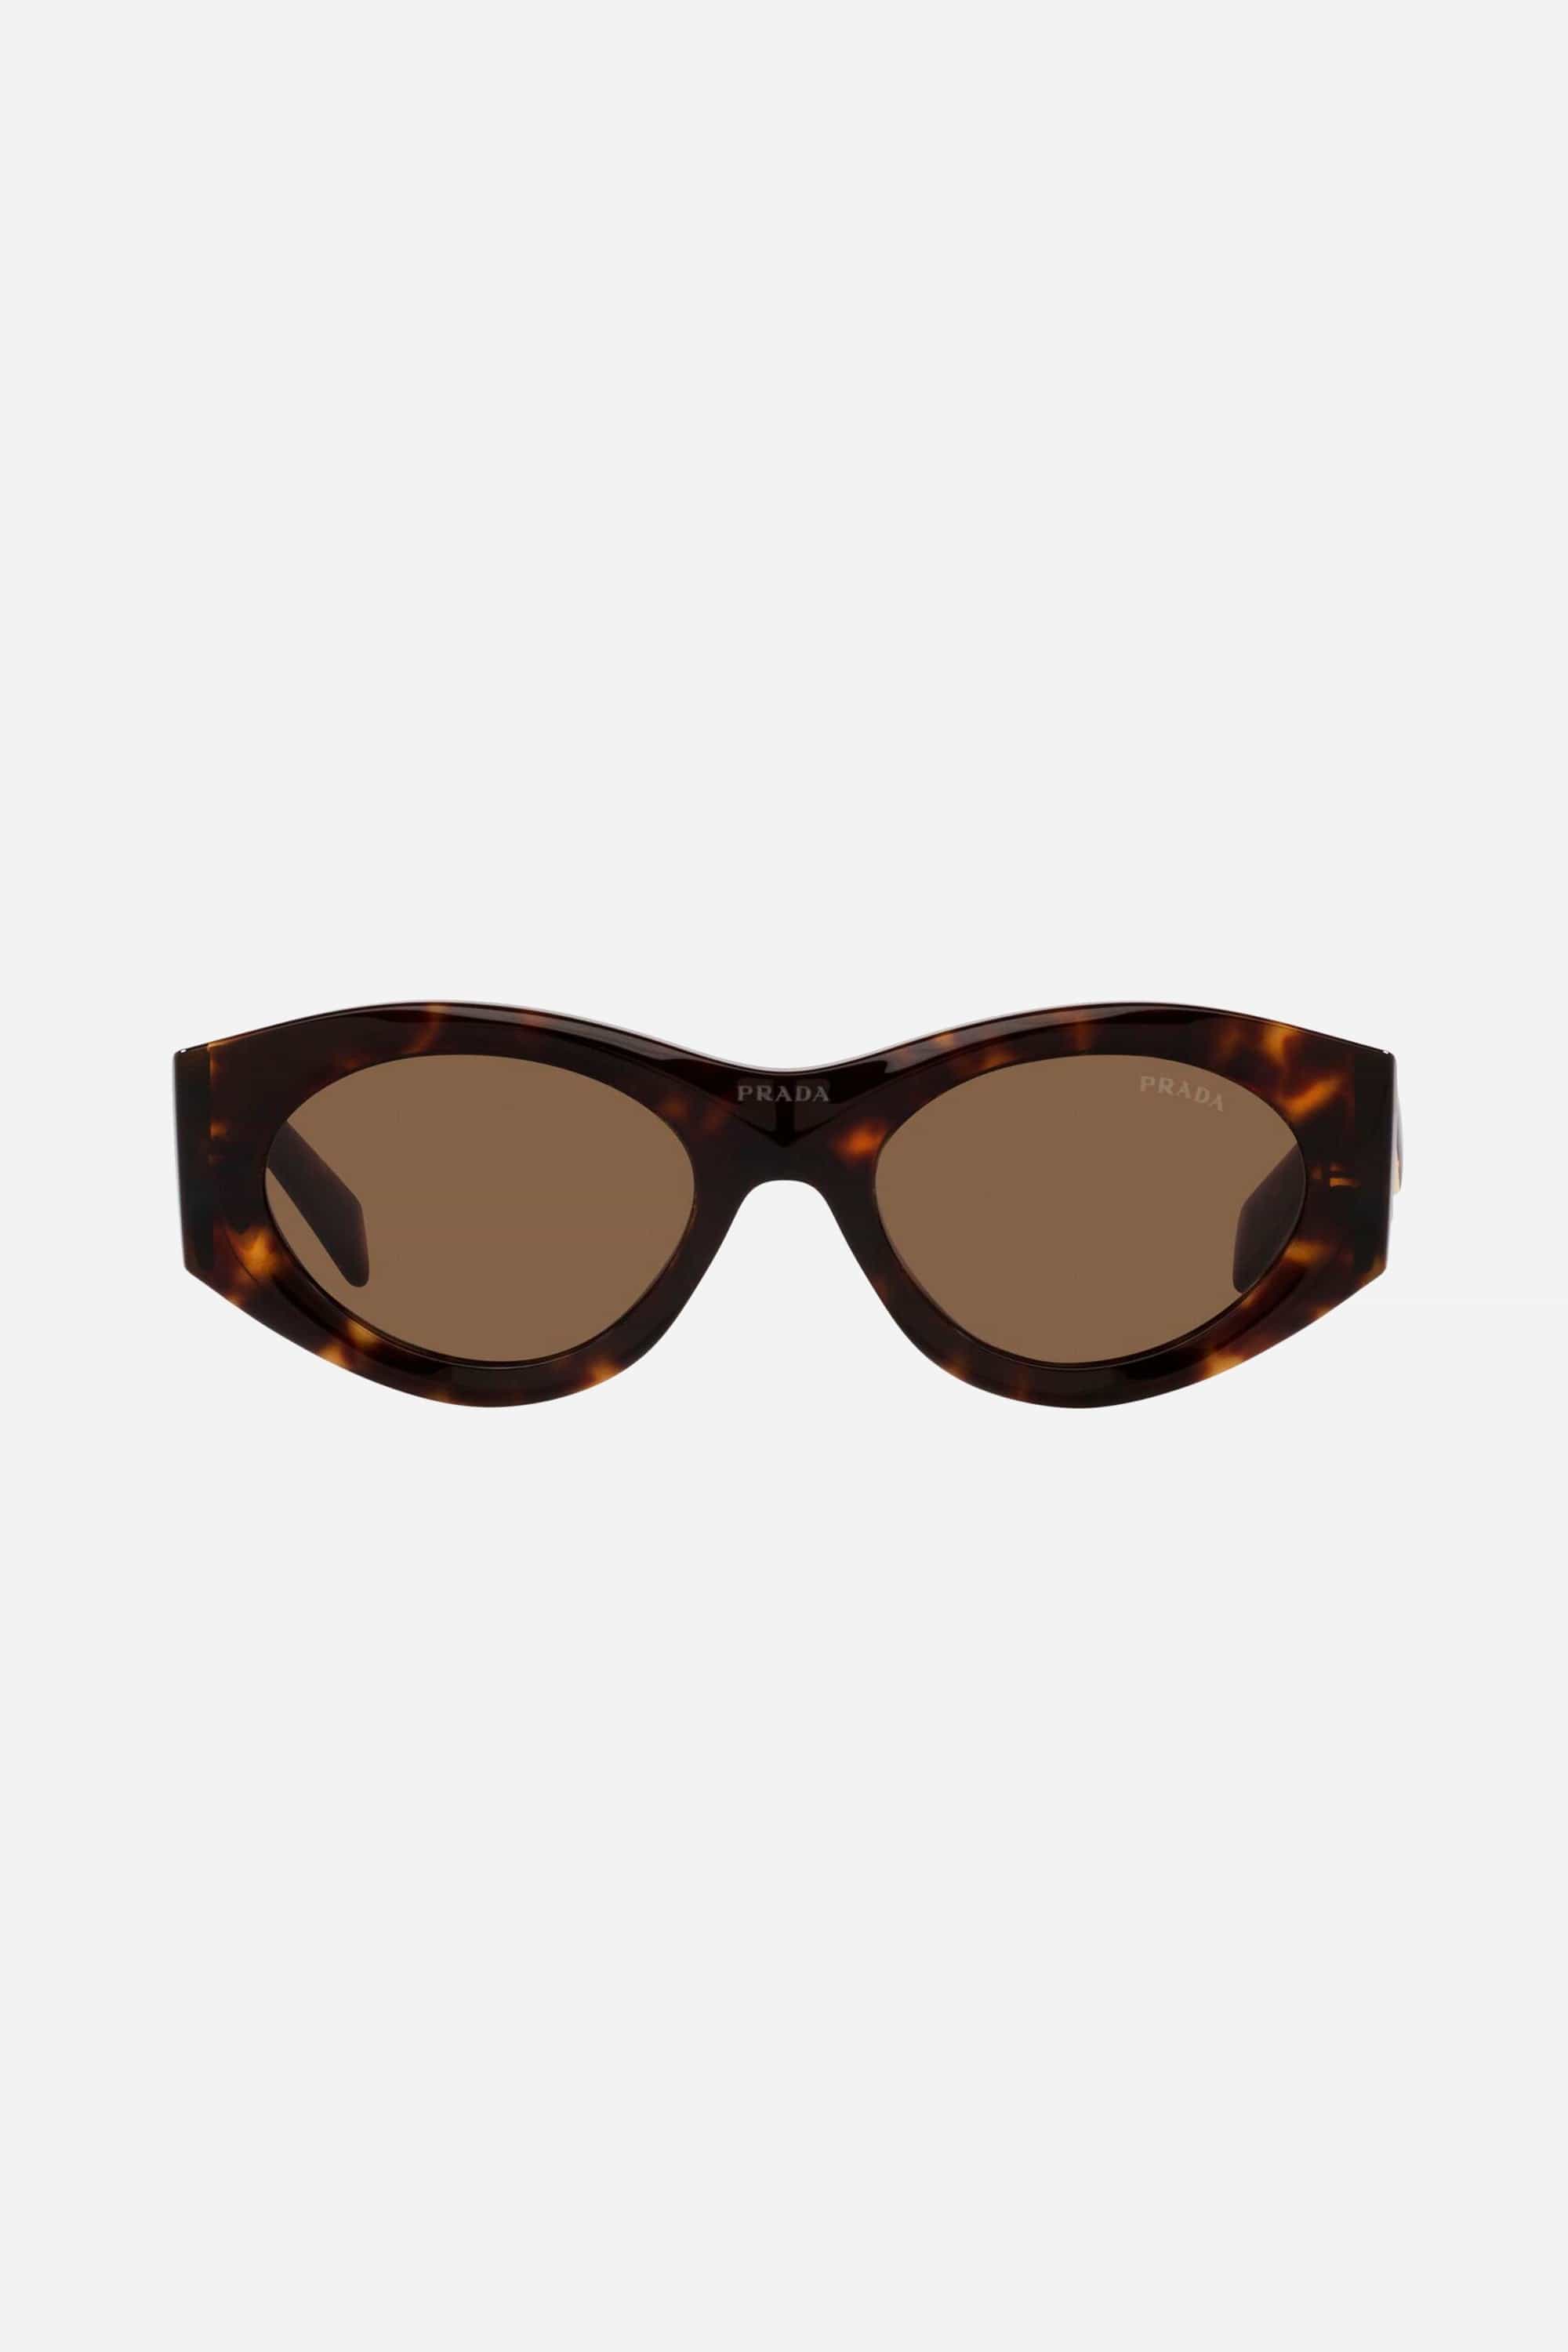 Prada PR20ZS havana bold oval sunglasses - Eyewear Club